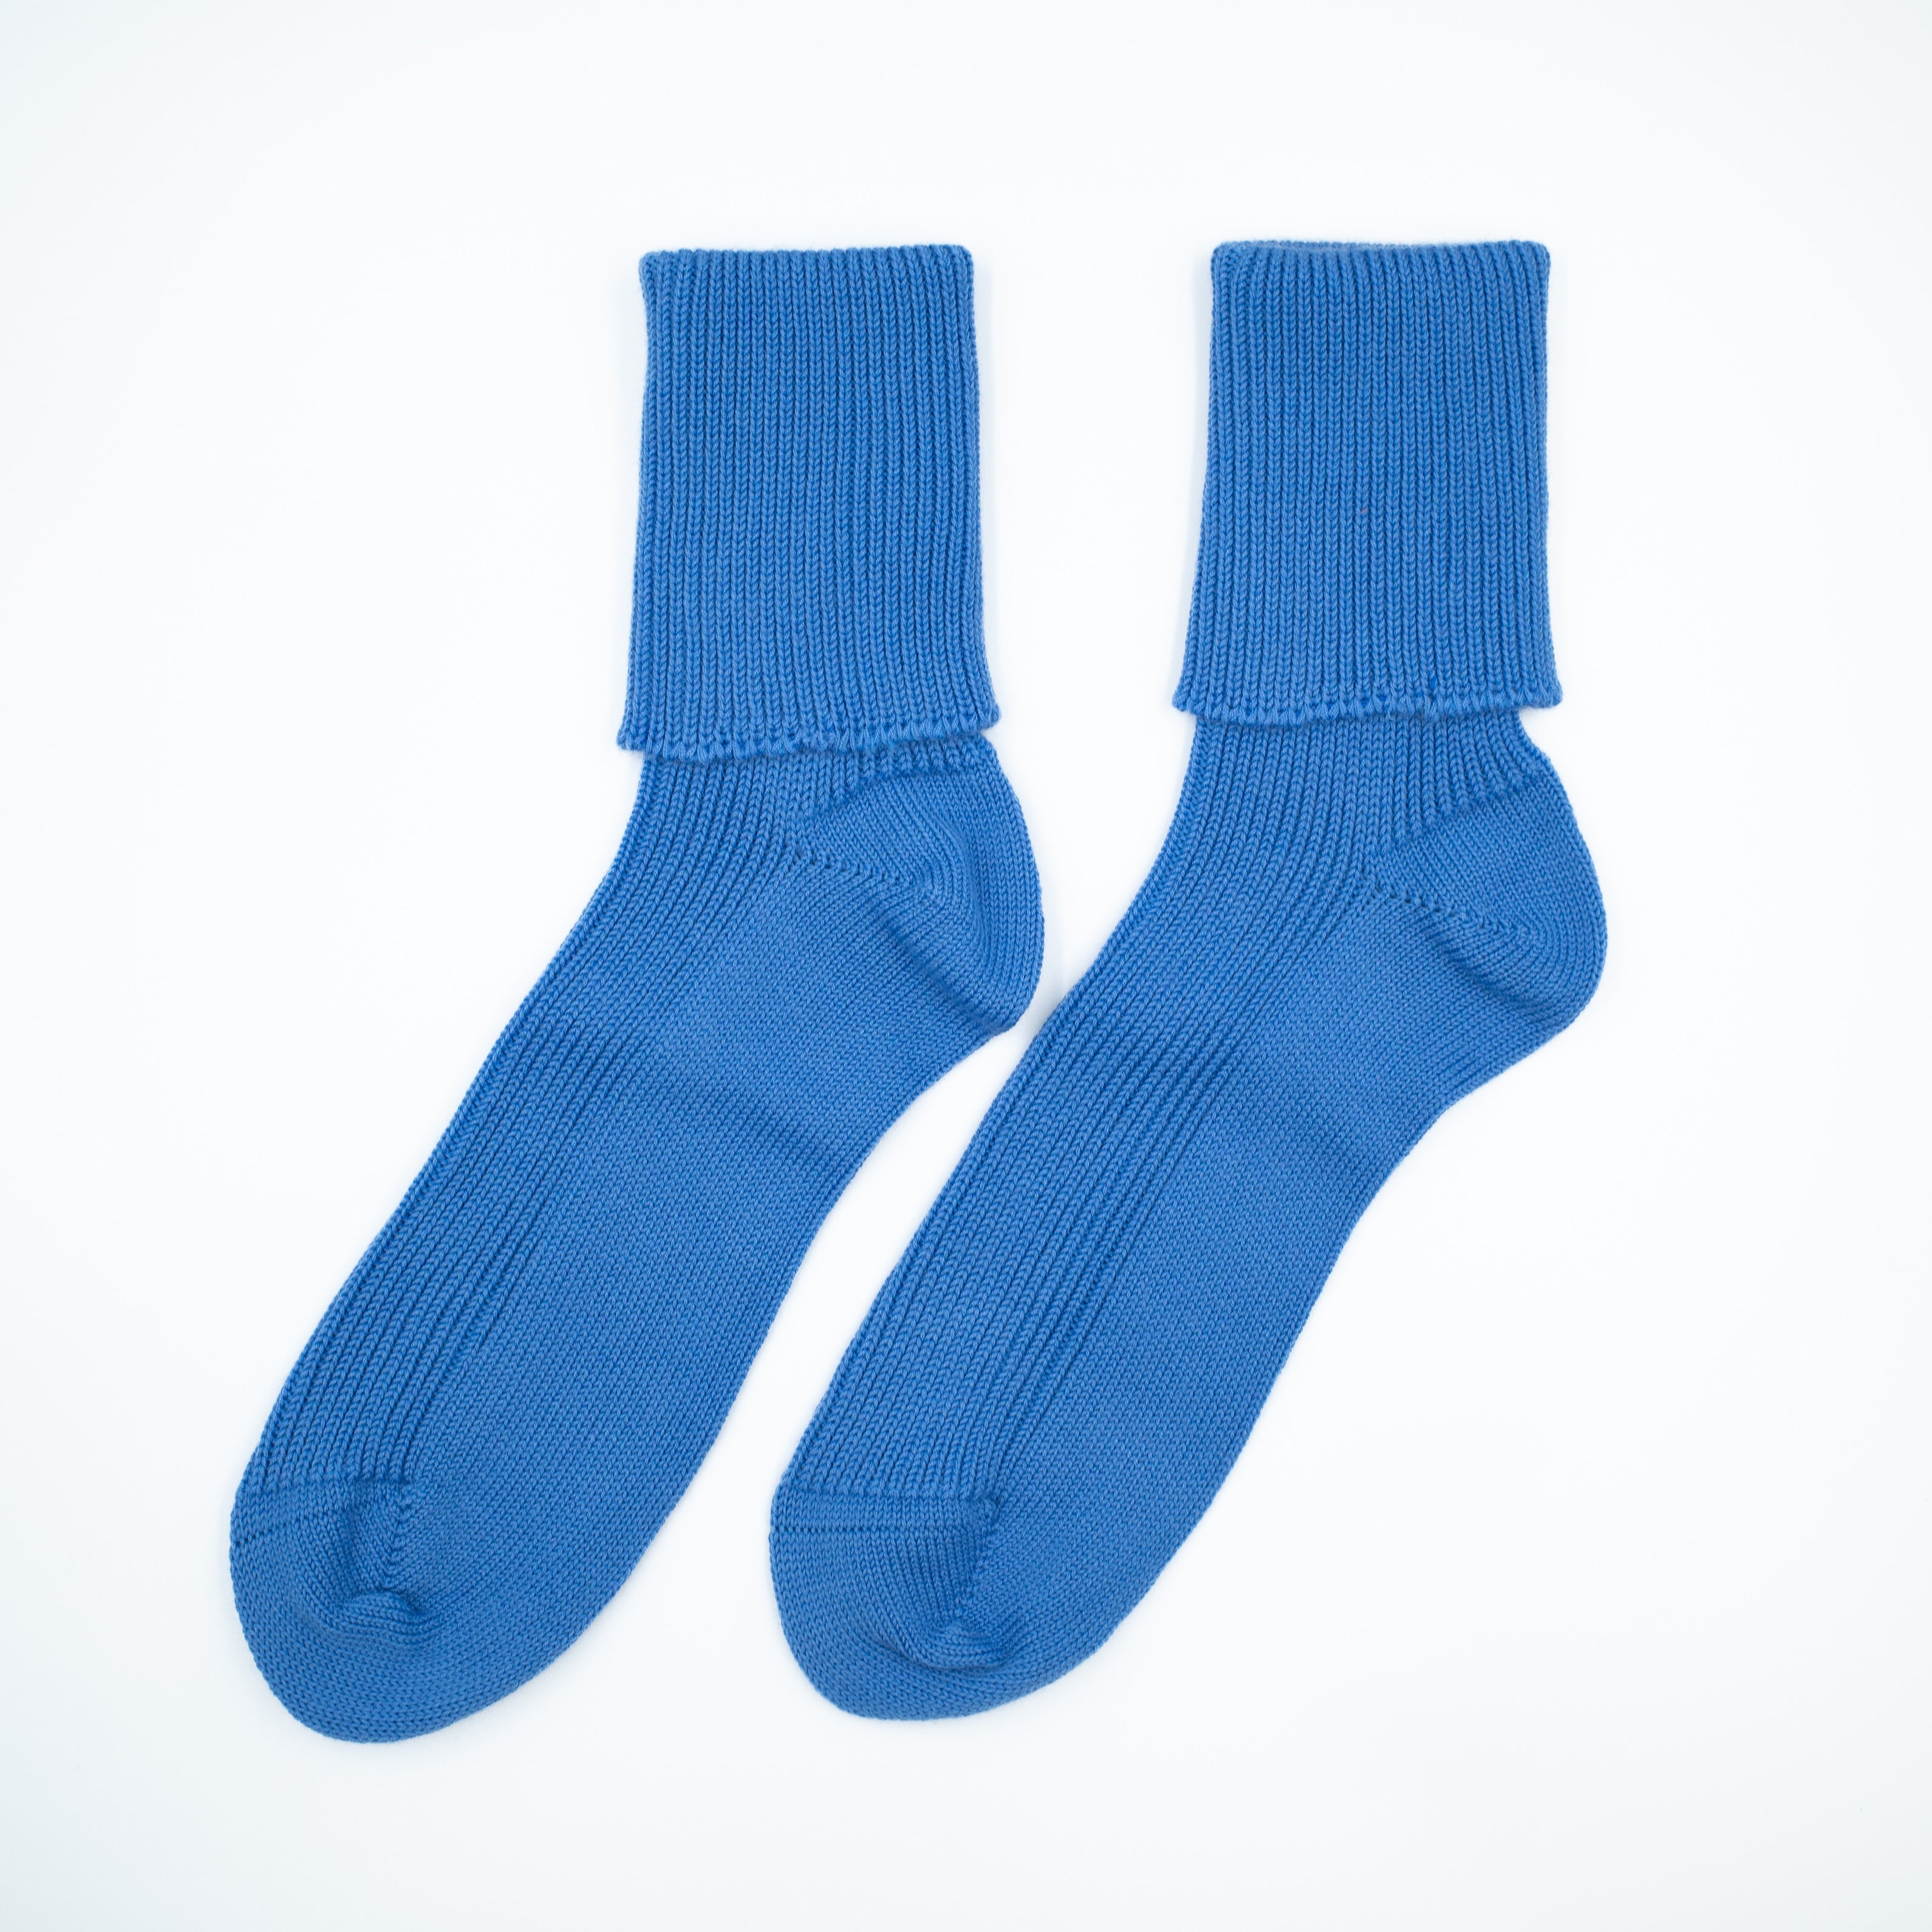 New Scottish Cornflower Blue Cashmere Every Day Socks